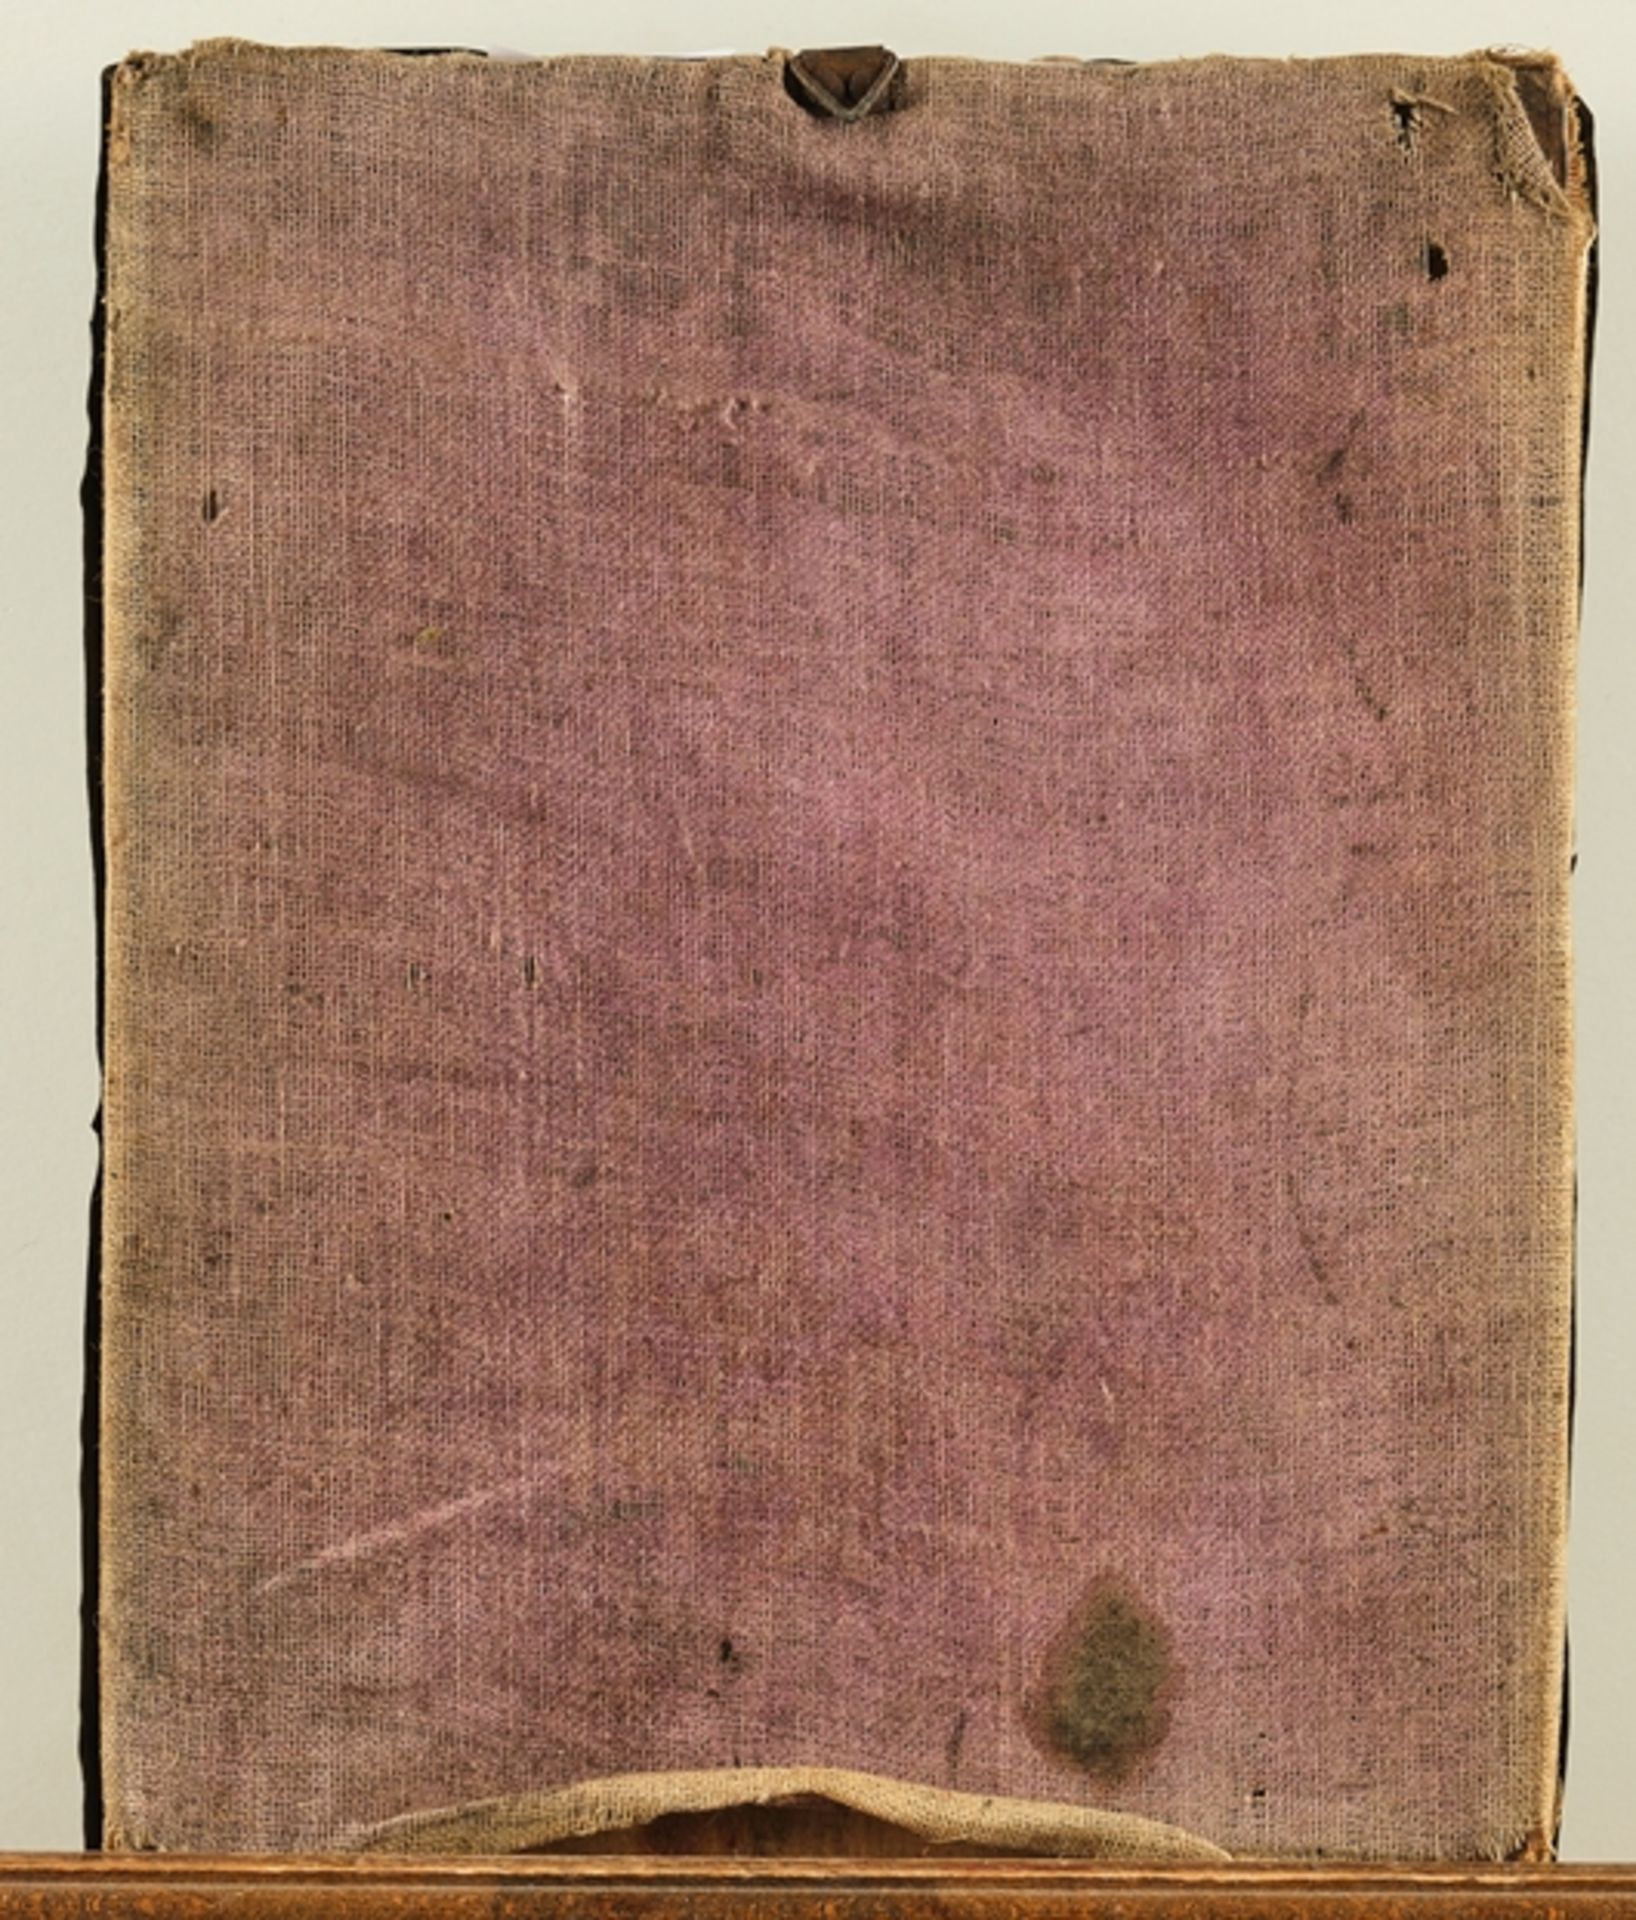 Ikone, Tempera auf Holz, Messingoklad, "Christus Pantokrator", 19. Jh., 23 x 18.5 cm, übergangen - Image 3 of 3